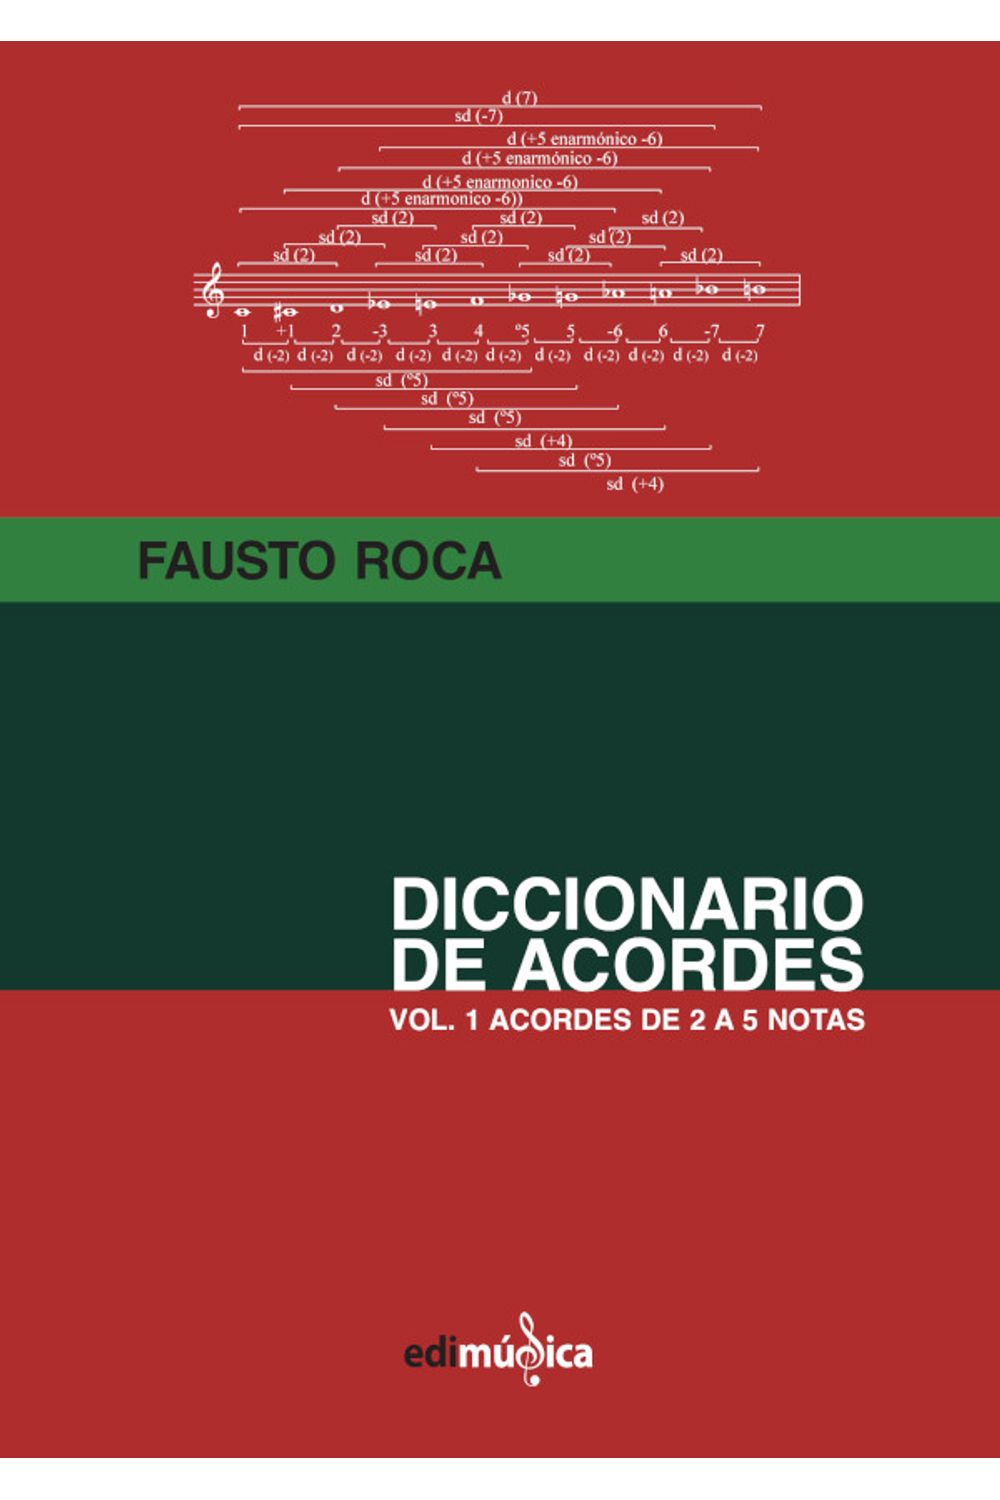 bm-diccionario-de-acordes-editorial-edimusica-9788494586415